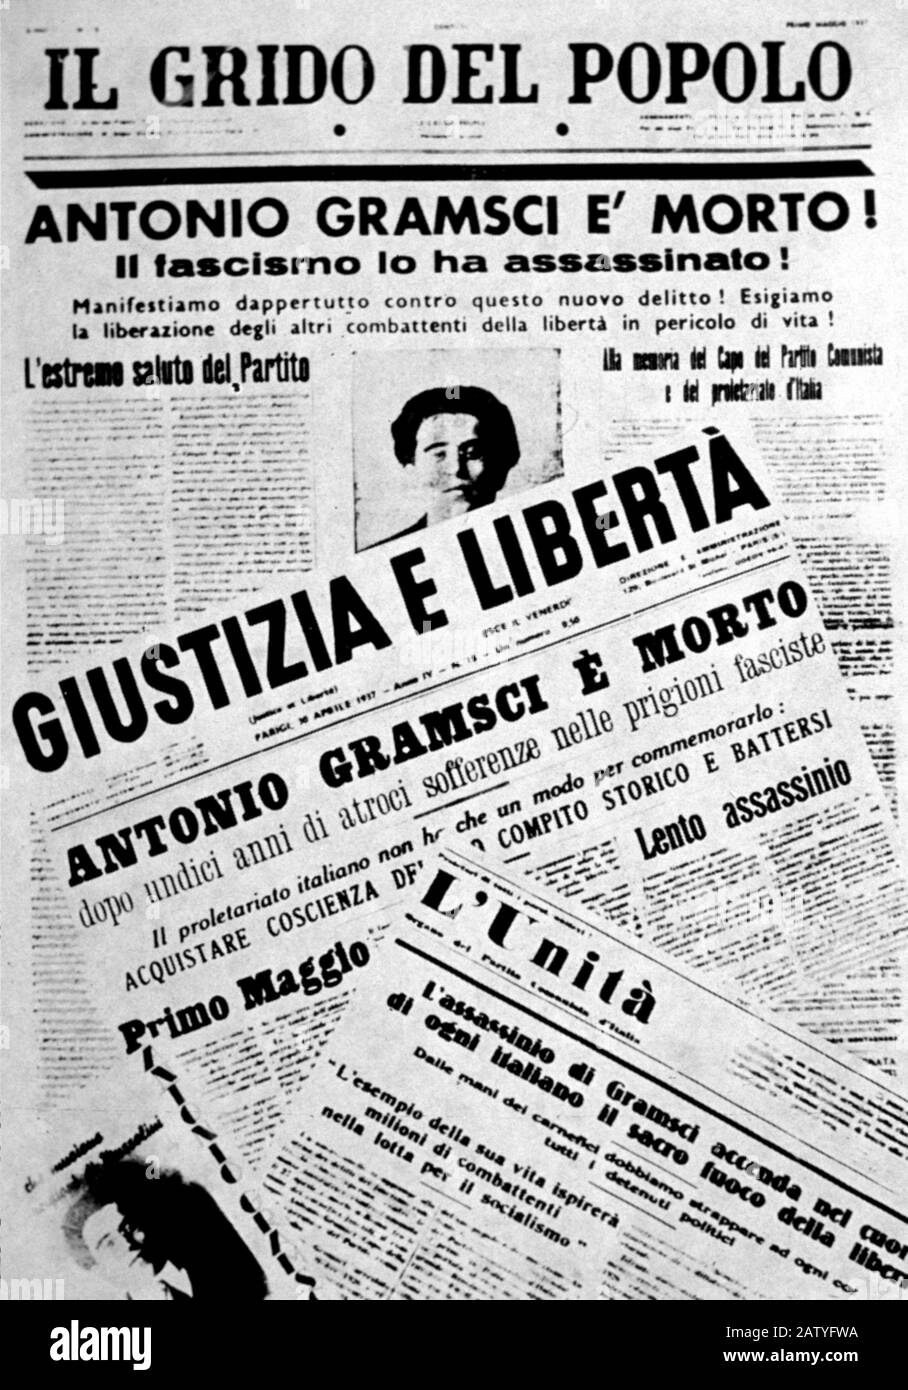 1937 ca.: ANTONIO GRAMSCI ( Ales , Oristano 1891 - Roma 1937 ) italienischer Intellektueller, Schriftsteller und Kommunist - PARTITO COMUNISTA ITALIANO - PCI - P Stockfoto